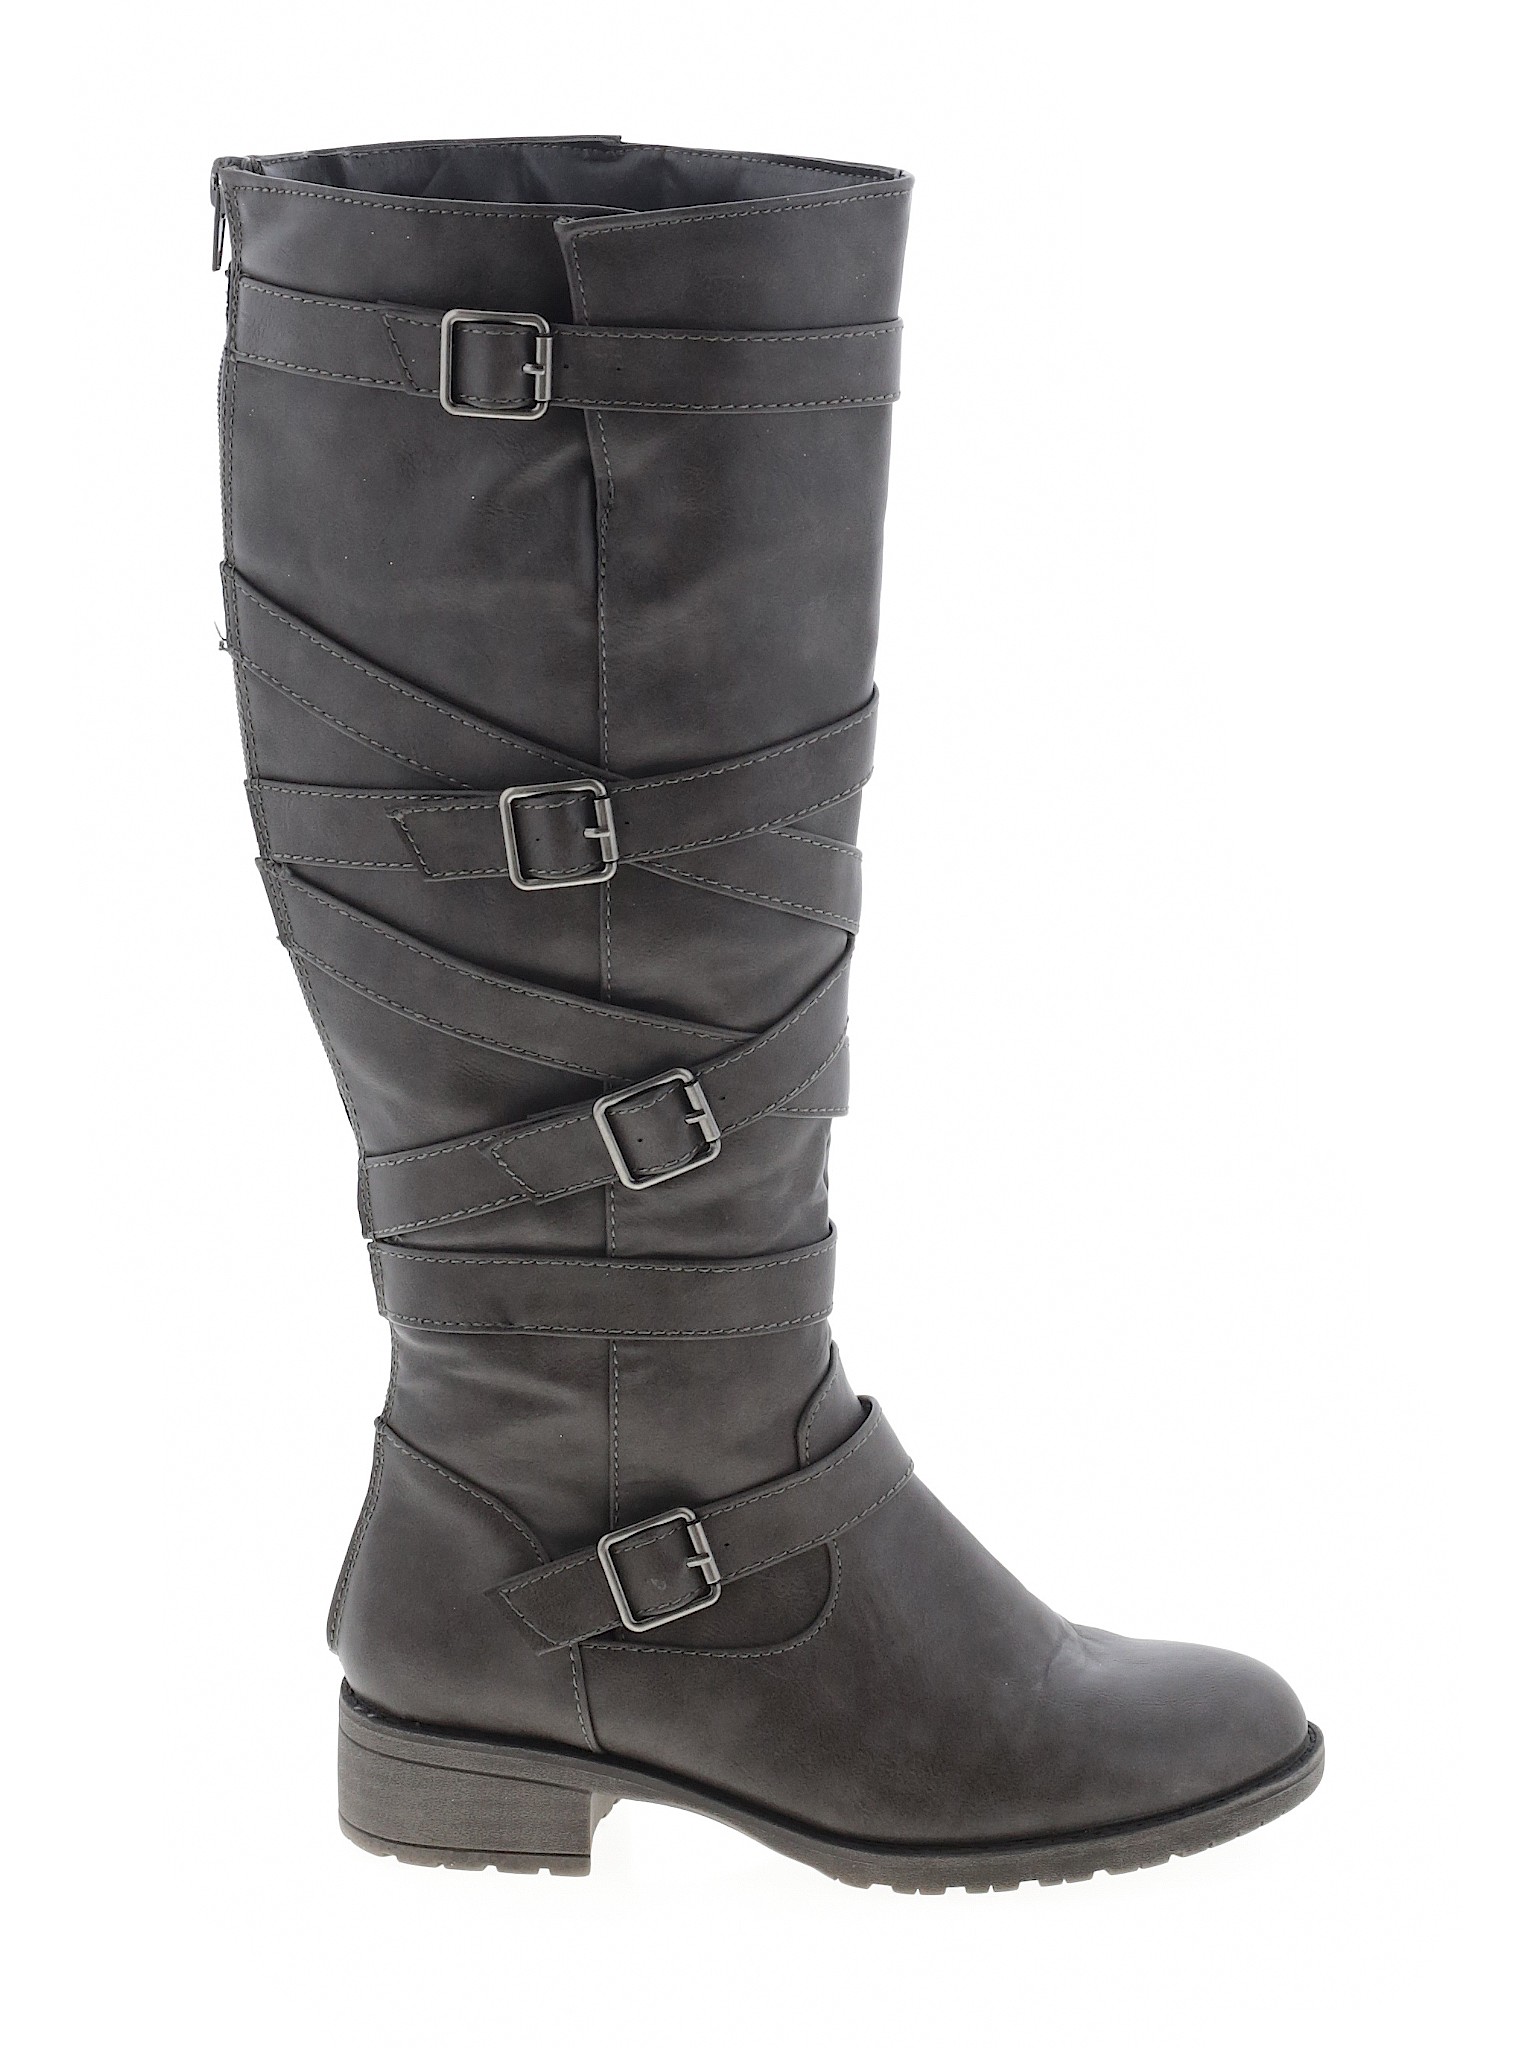 Just Fab Women Gray Boots US 6.5 | eBay